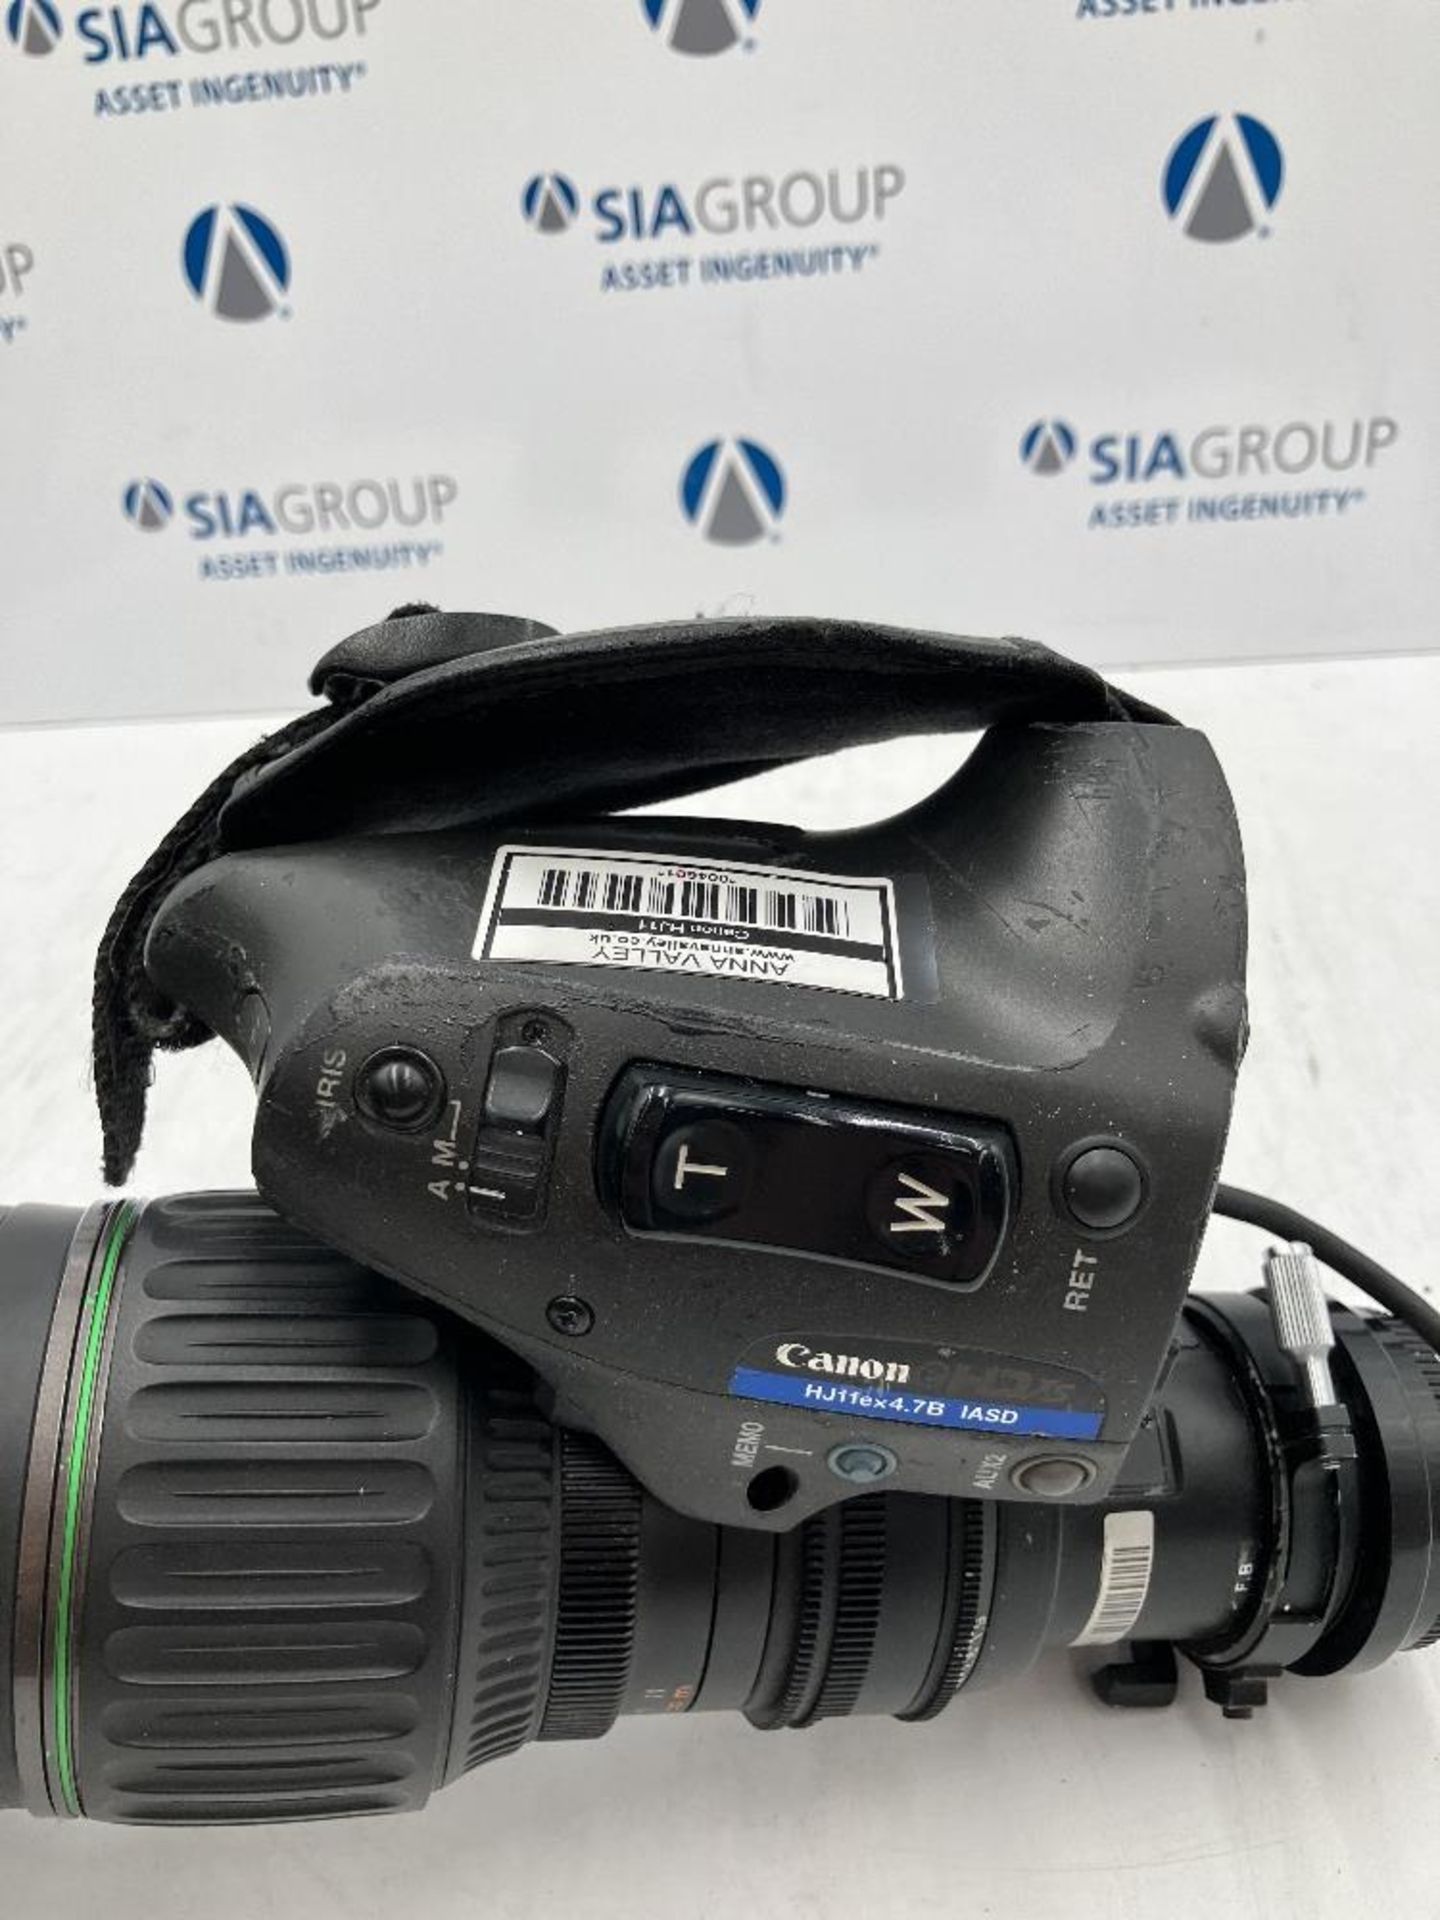 Canon HJ11x4.7 IASD HDTV Zoom Lens Kit - Image 7 of 14